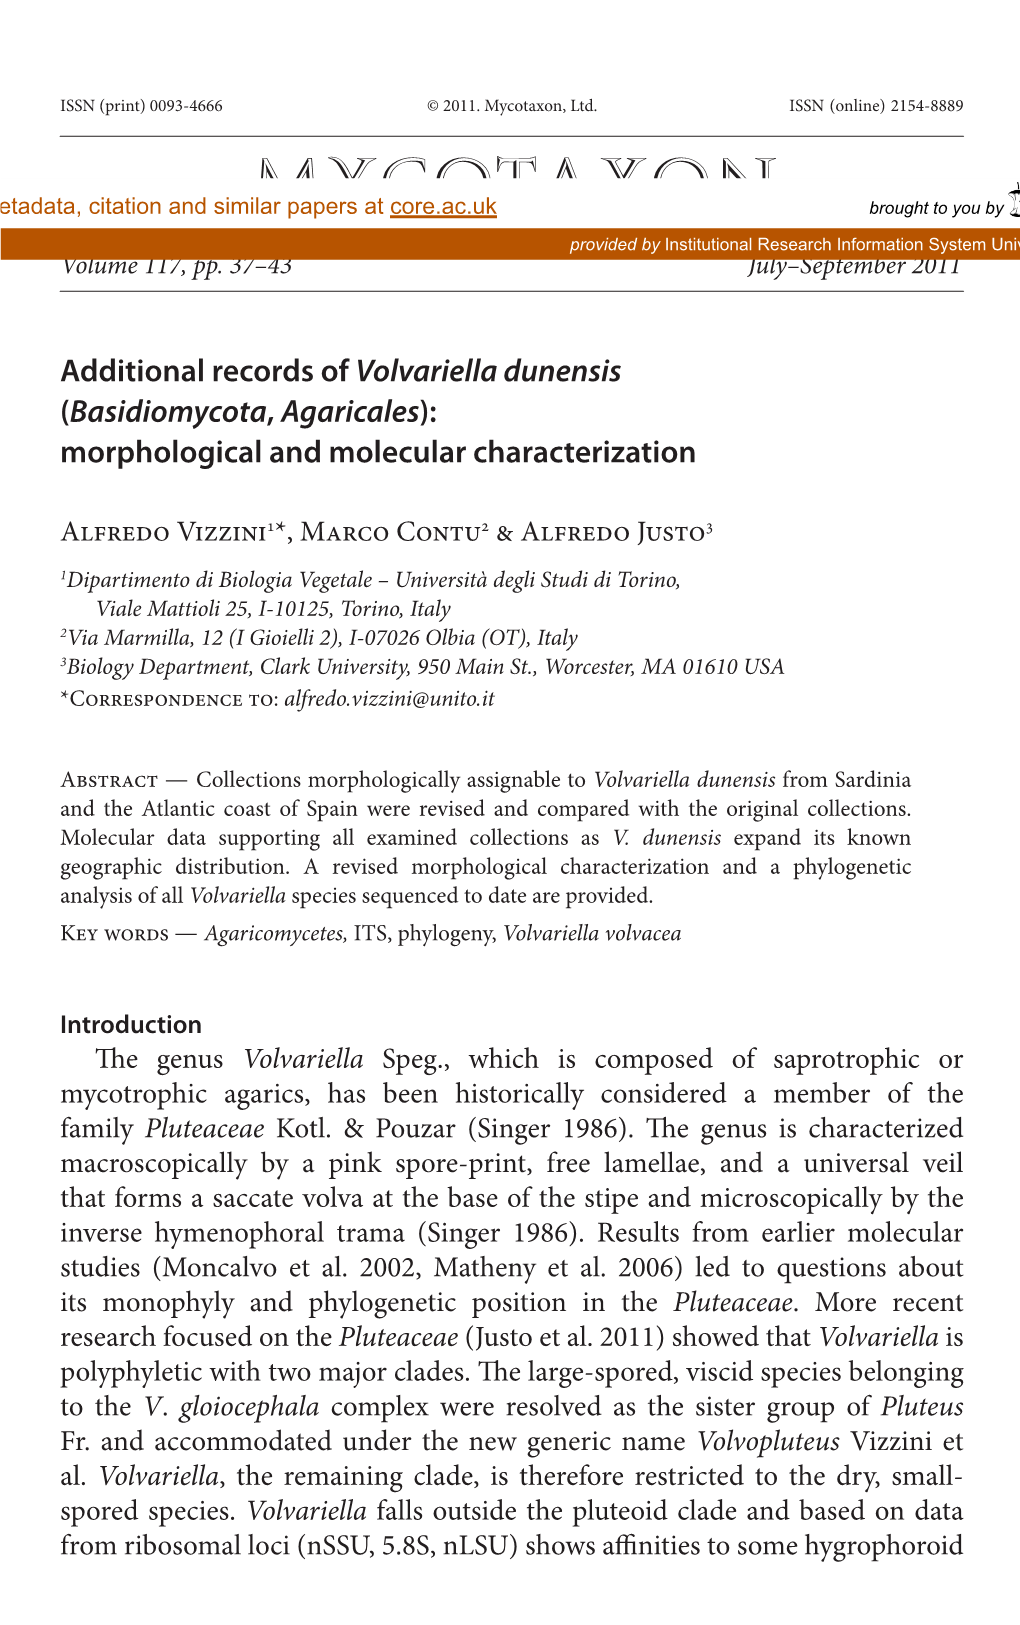 Additional Records of &lt;I&gt;Volvariella Dunensis&lt;/I&gt; (&lt;I&gt;Basidiomycota&lt;/I&gt;, &lt;I&gt; Agaricales&lt;/I&gt;)